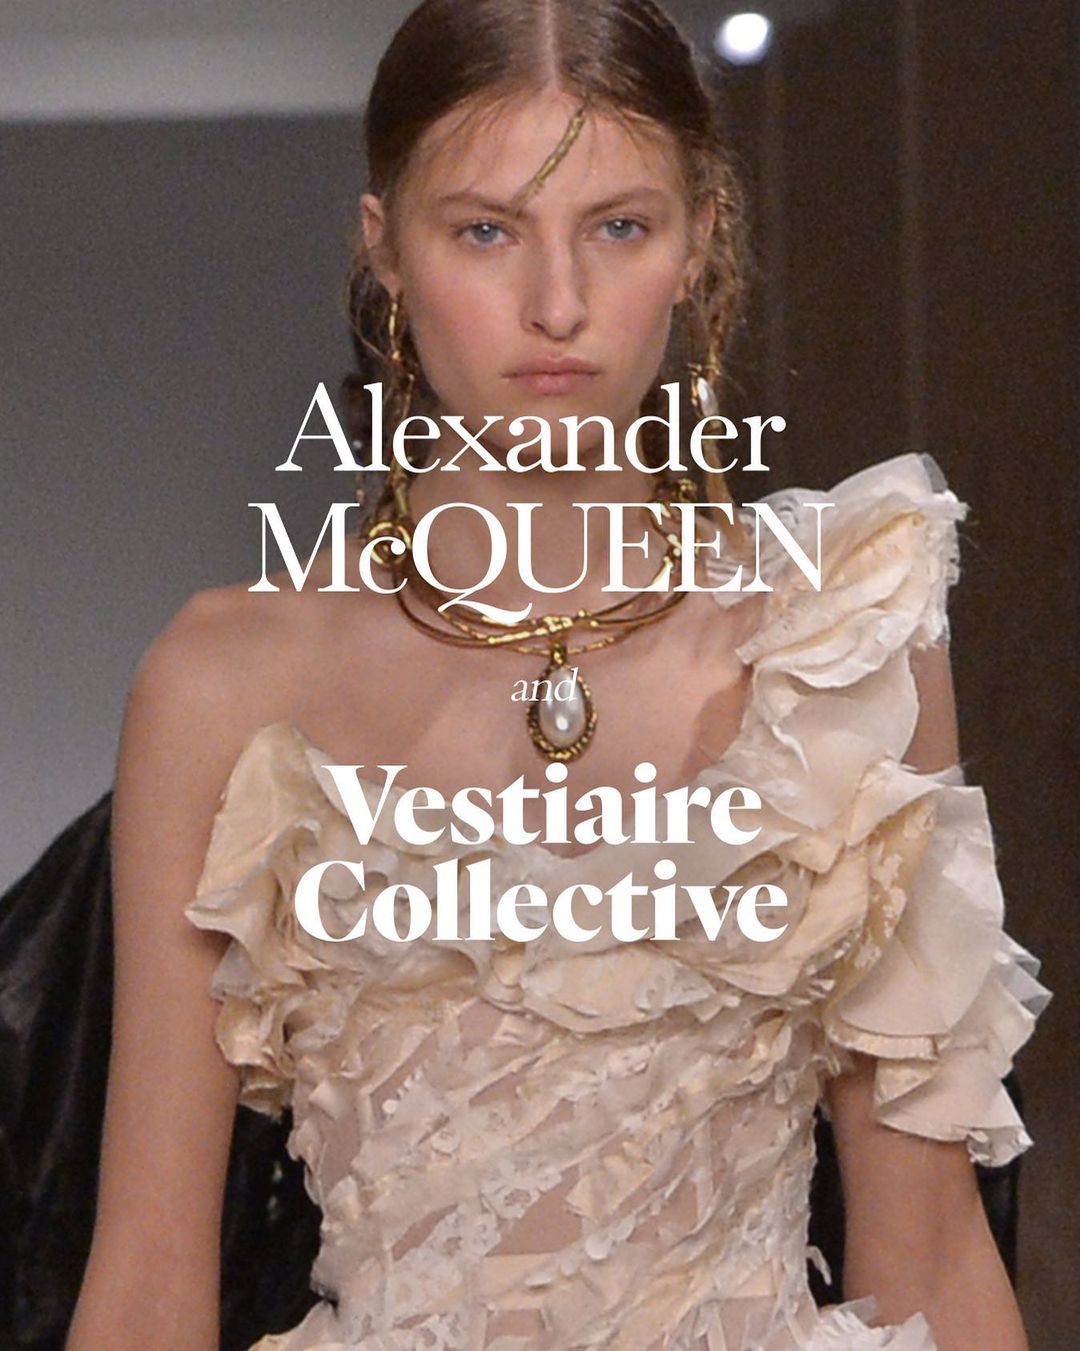 Vestiaire Collective tuyên bố hợp tác thời trang resale với Alexander McQueen